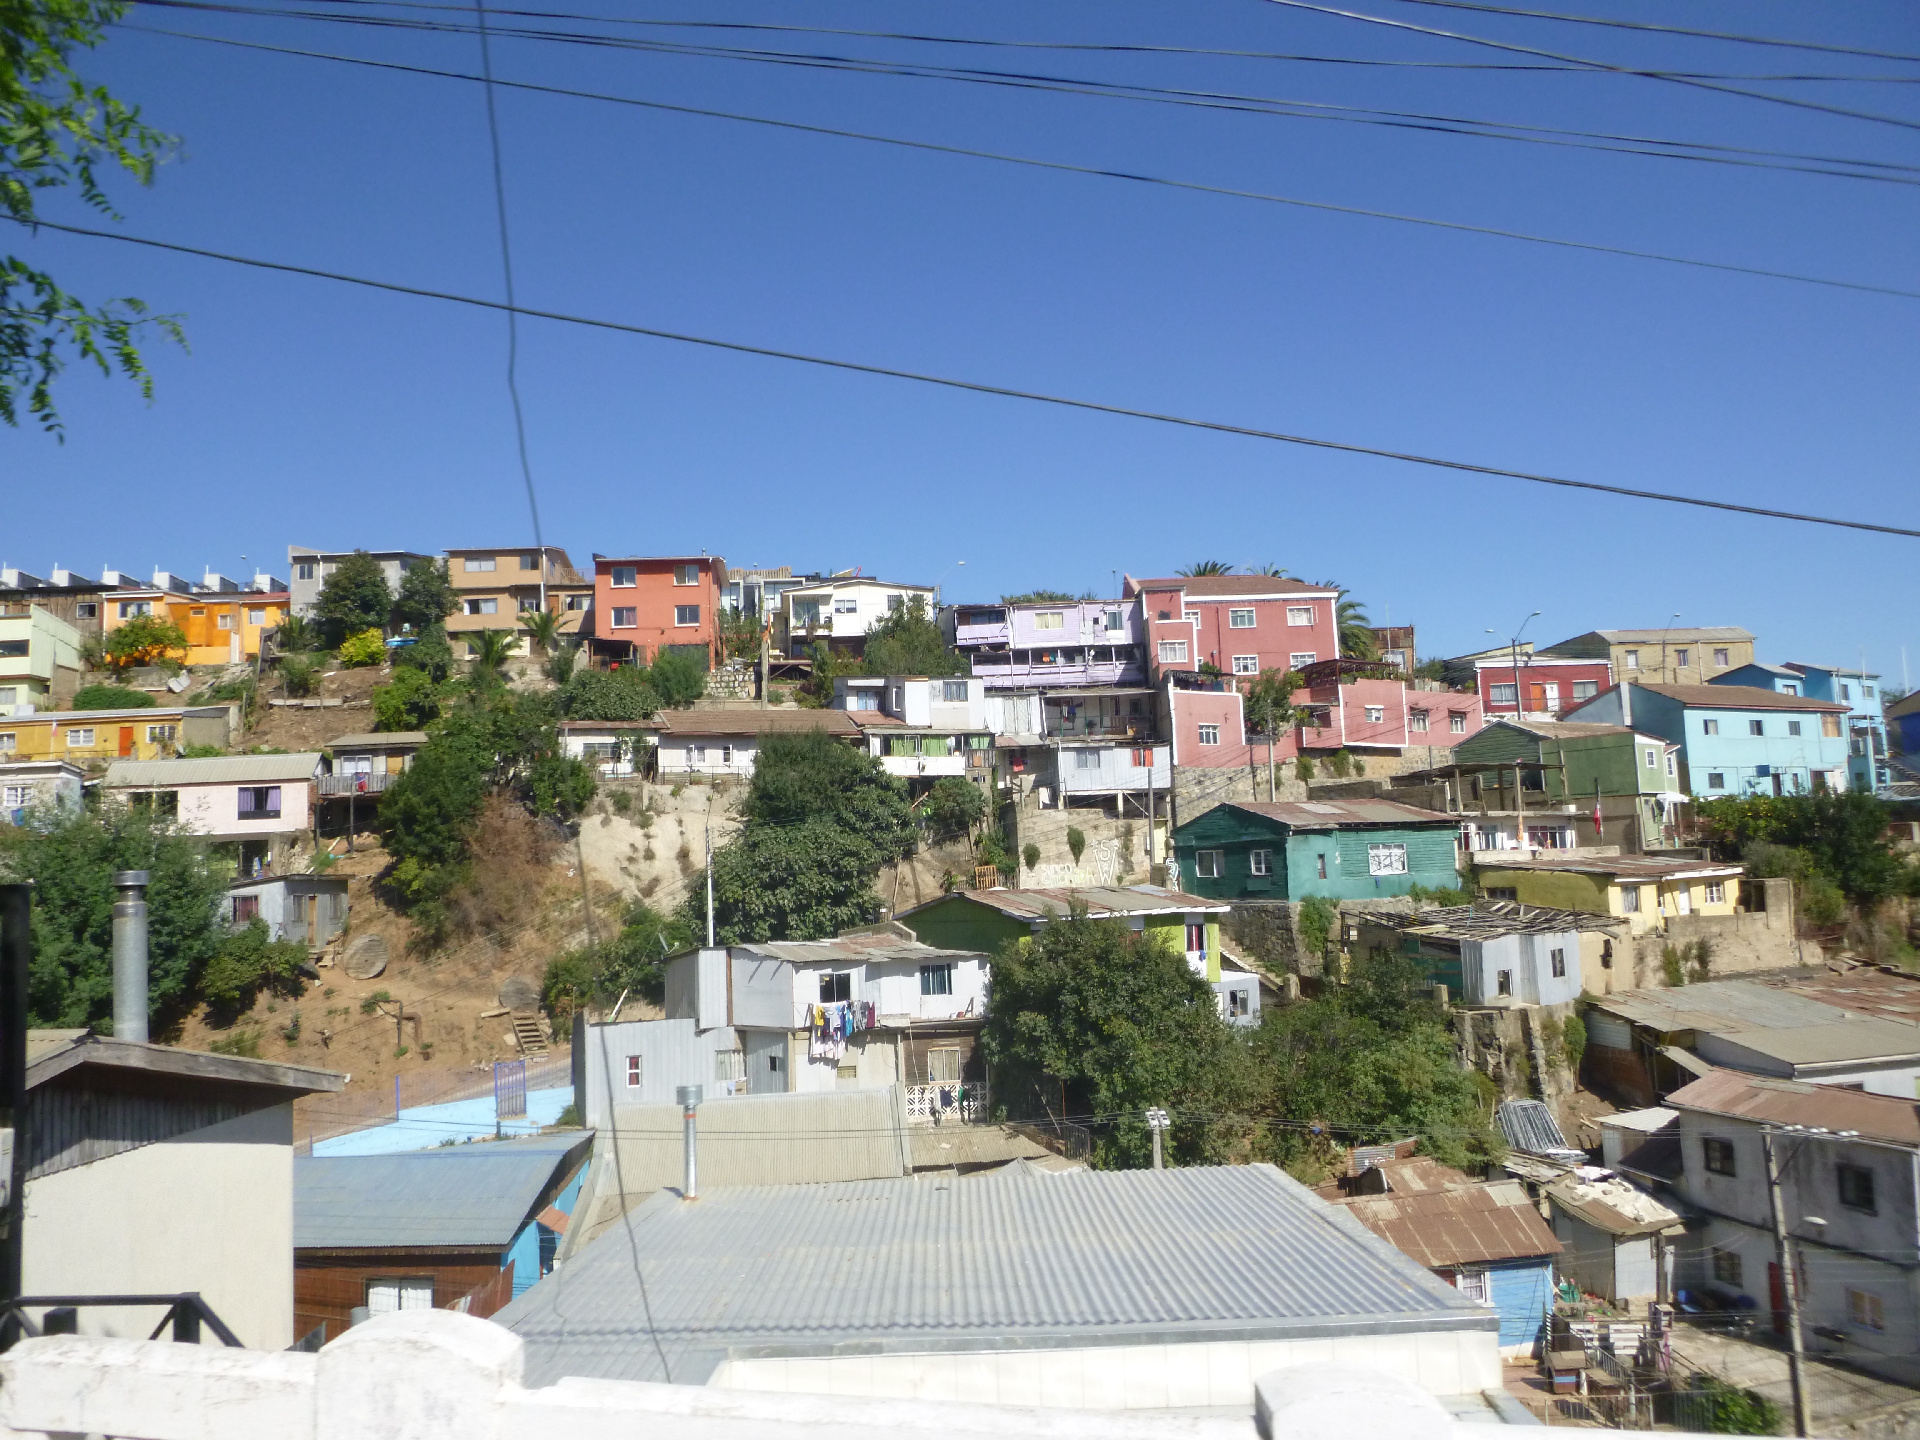 20160117-103754-Valparaiso-P8560.JPG